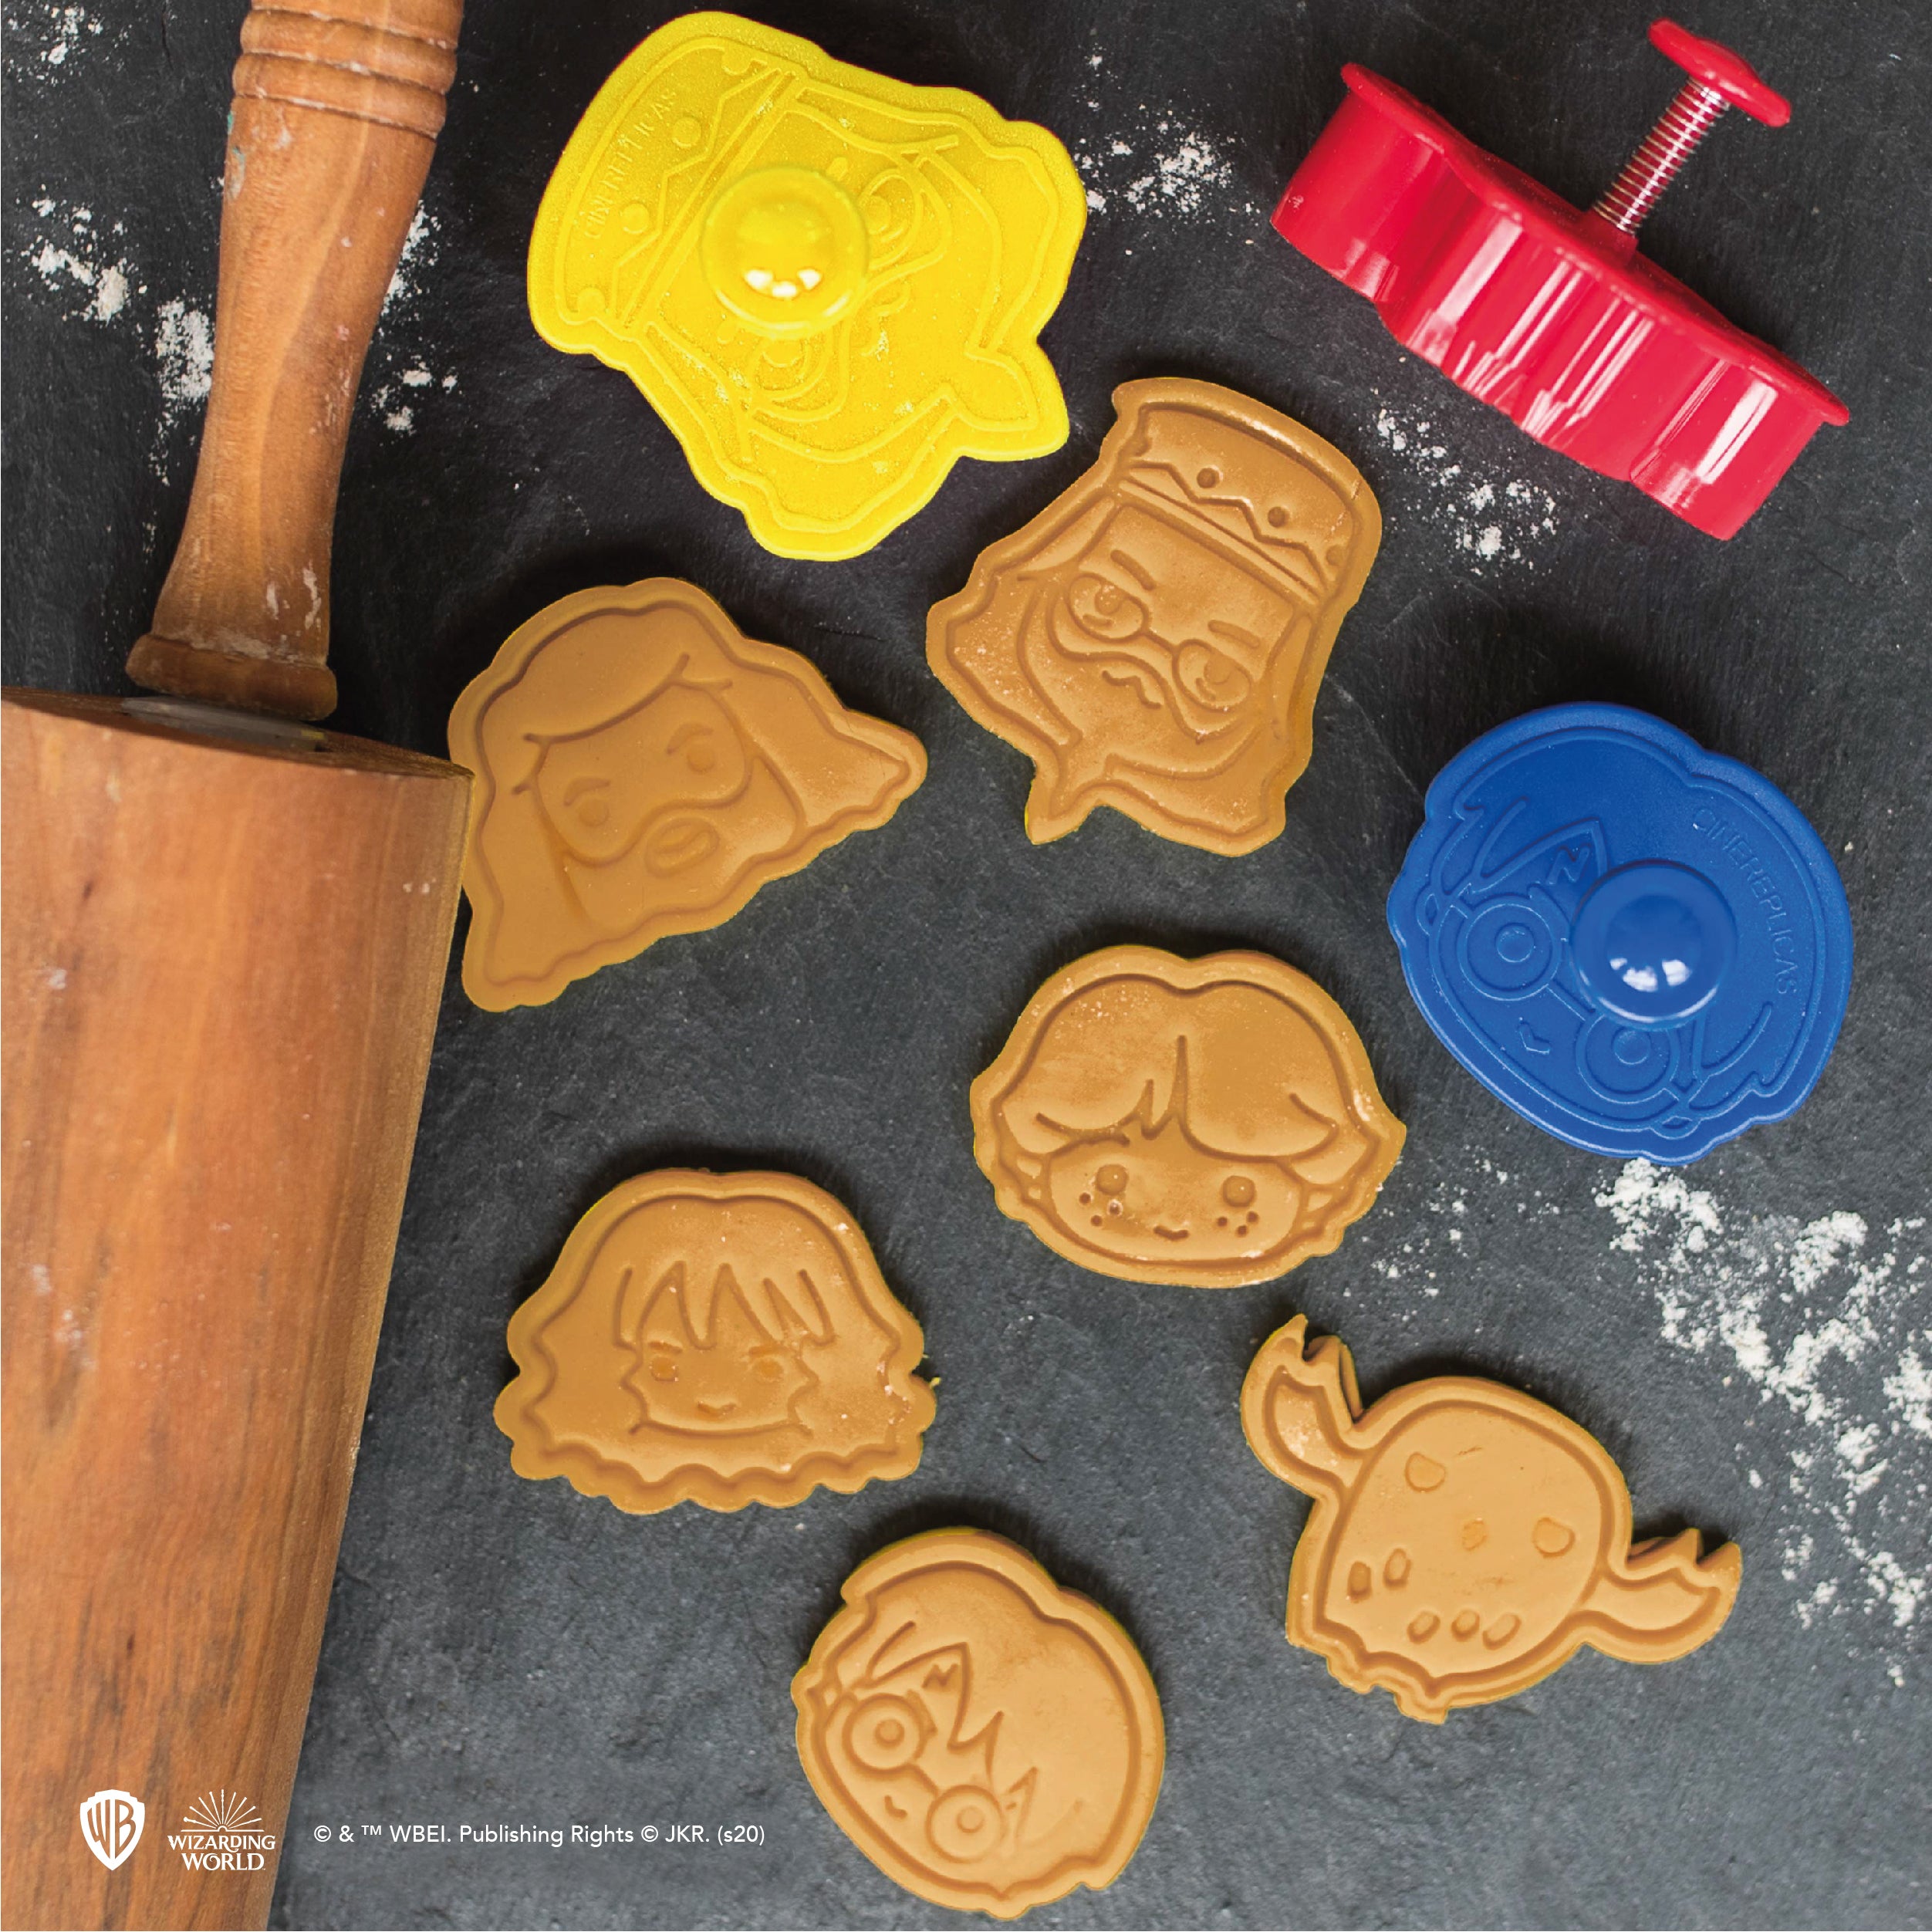 Harry Potter - Hufflepuff Shield 266-317 Cookie Cutter Set